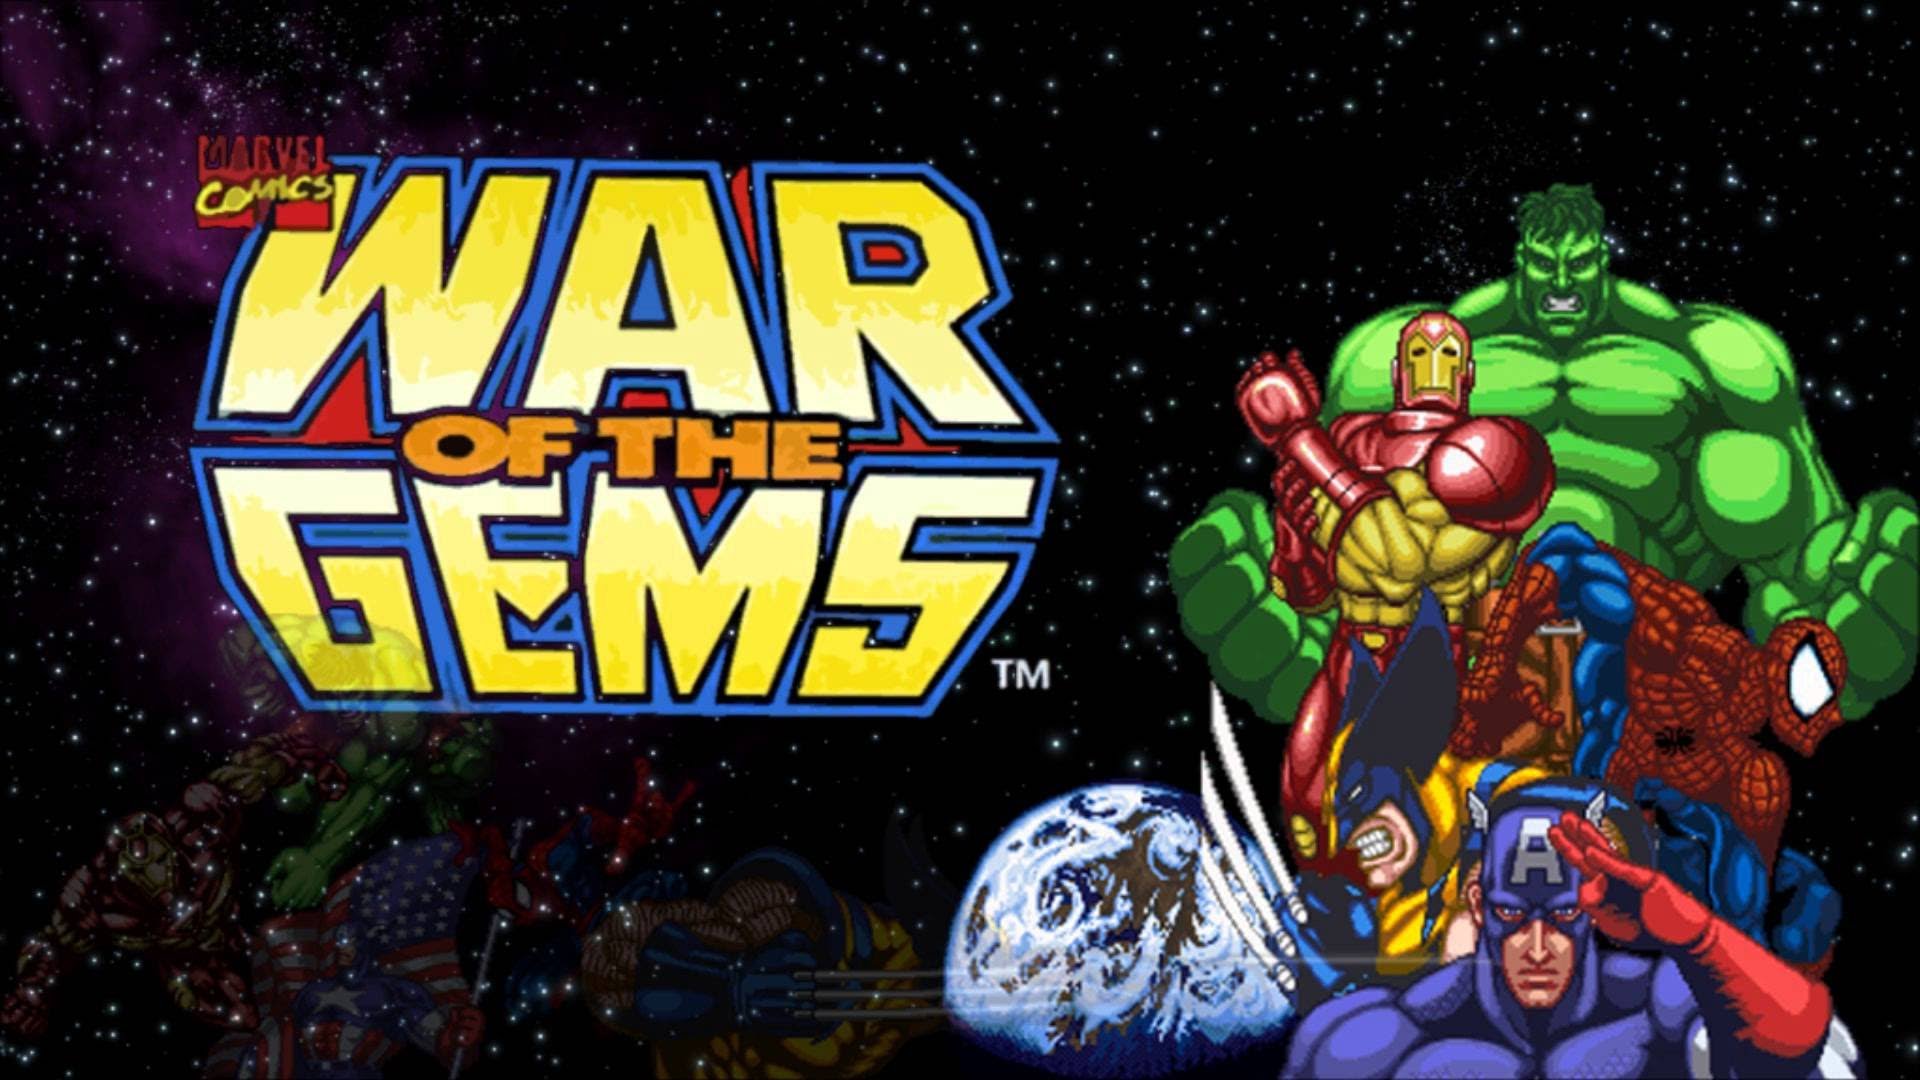 Marvel Super Heroes In War Of The Gems #24